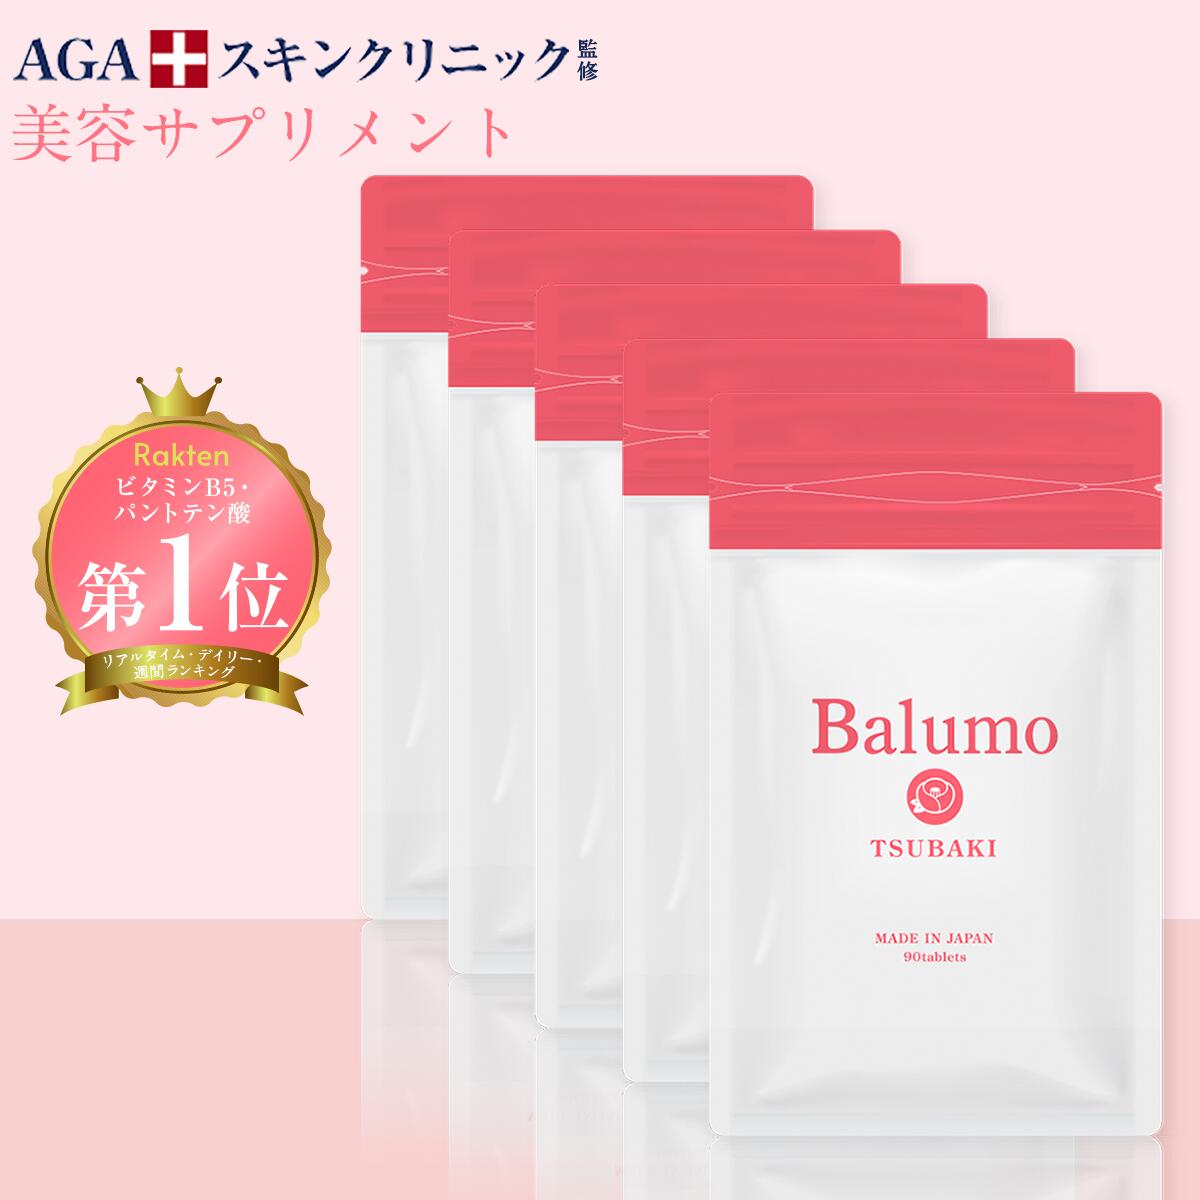 Balumo TSUBAKI バルモツバキ AGA 90粒